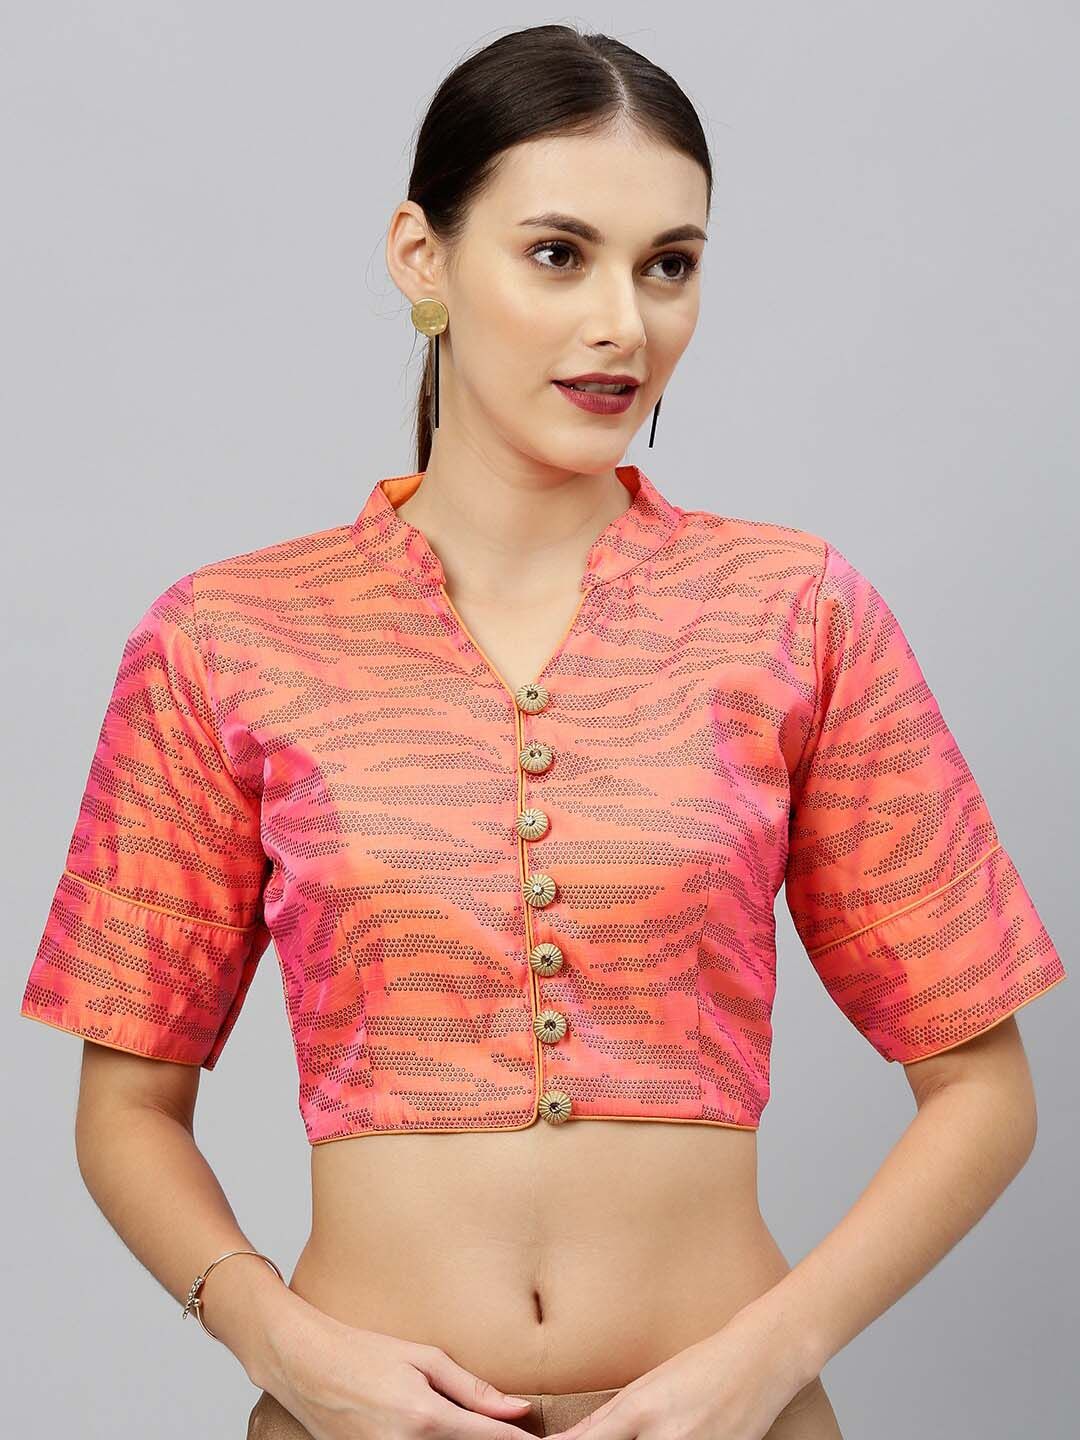 Fab Viva Peach-Colored Printed Silk Saree Blouse Price in India